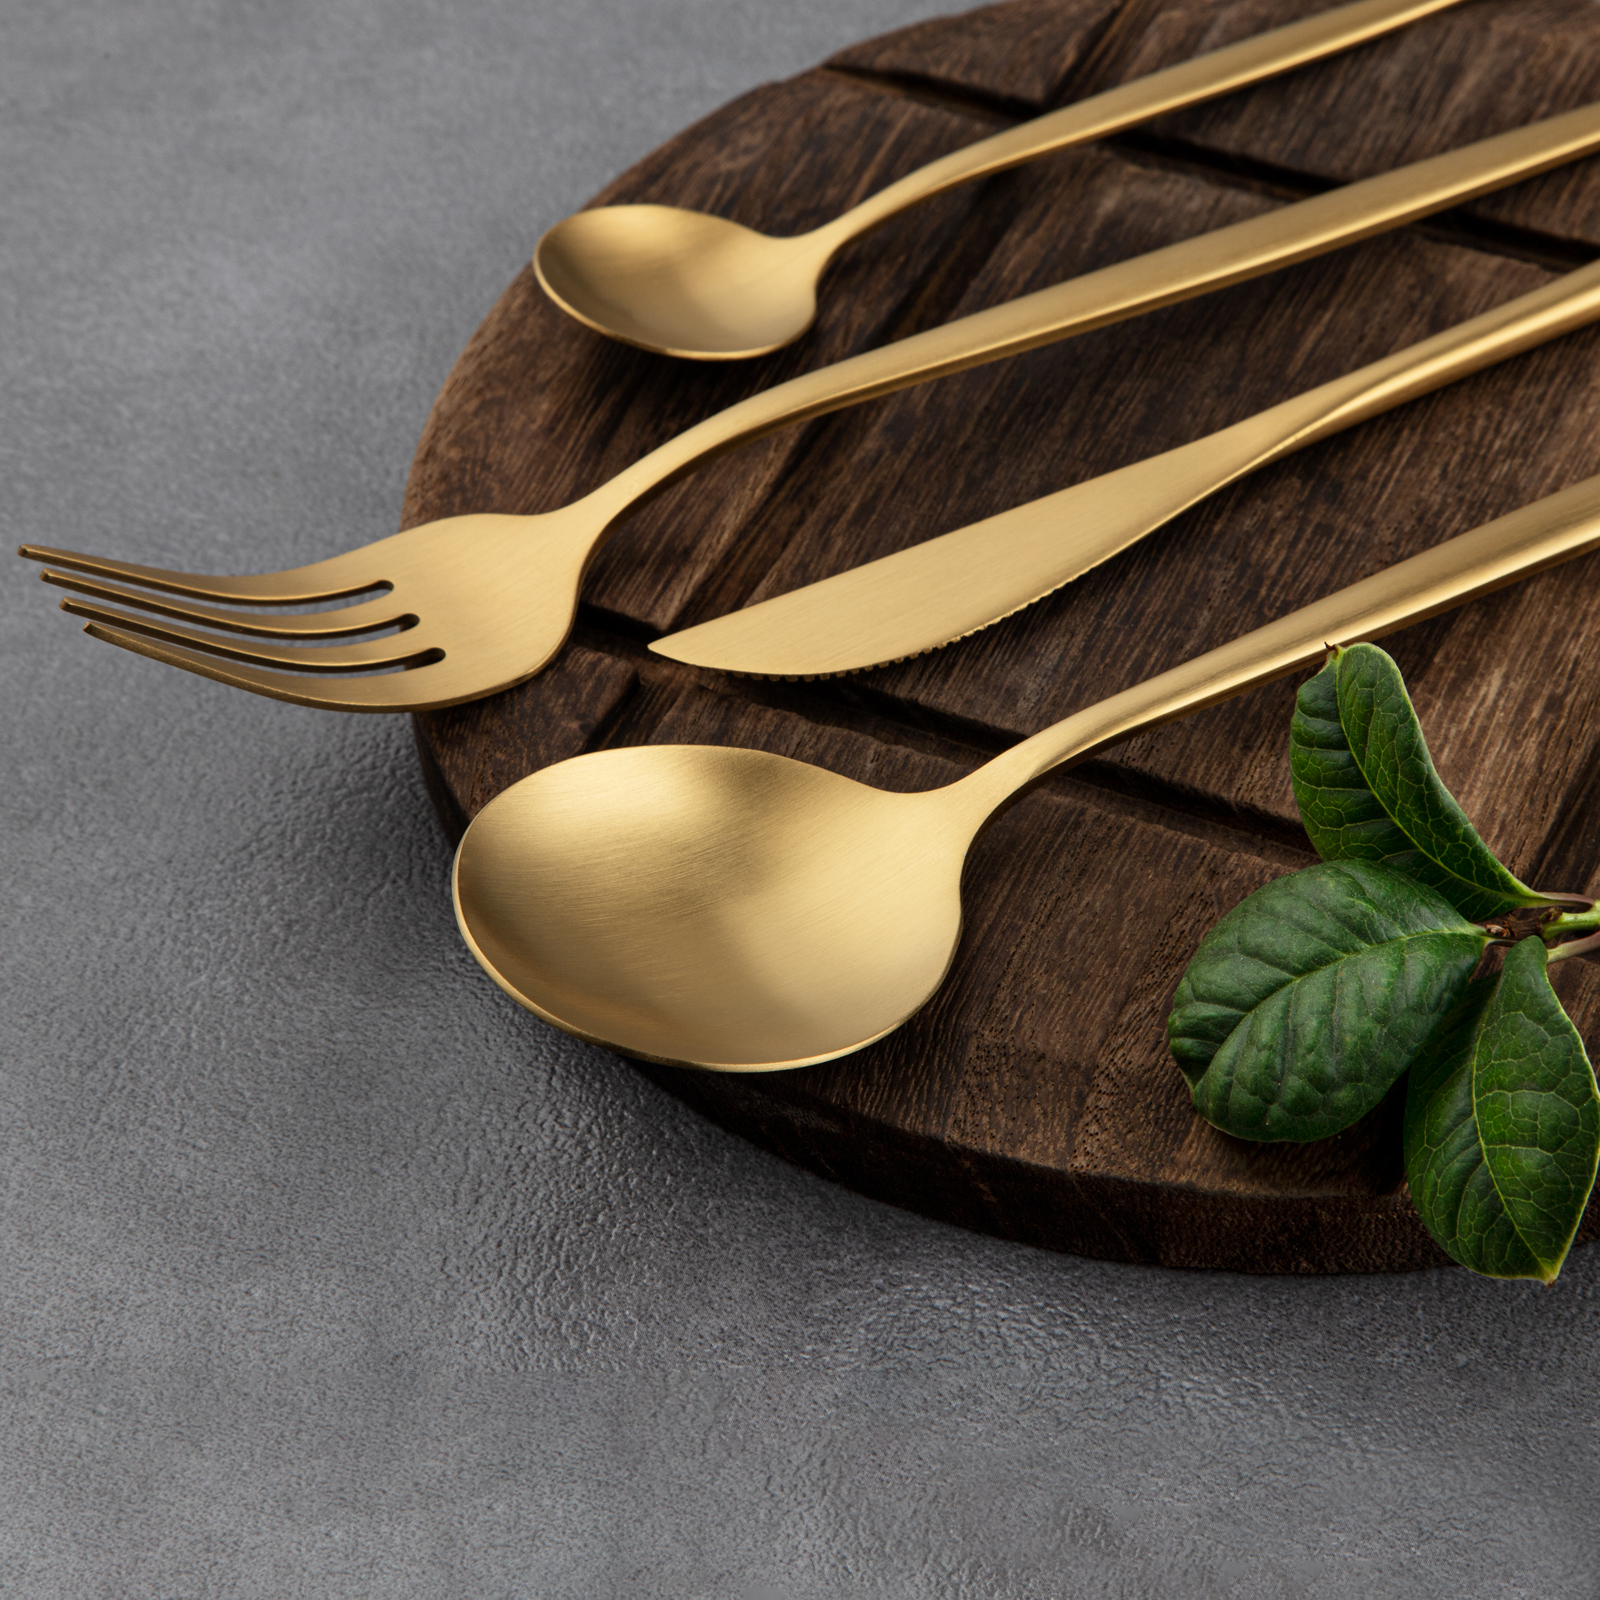 Stainless Steel Knife Fork Spoon Dinnerware Kitchen Cutlery Set 24Pcs -Gold